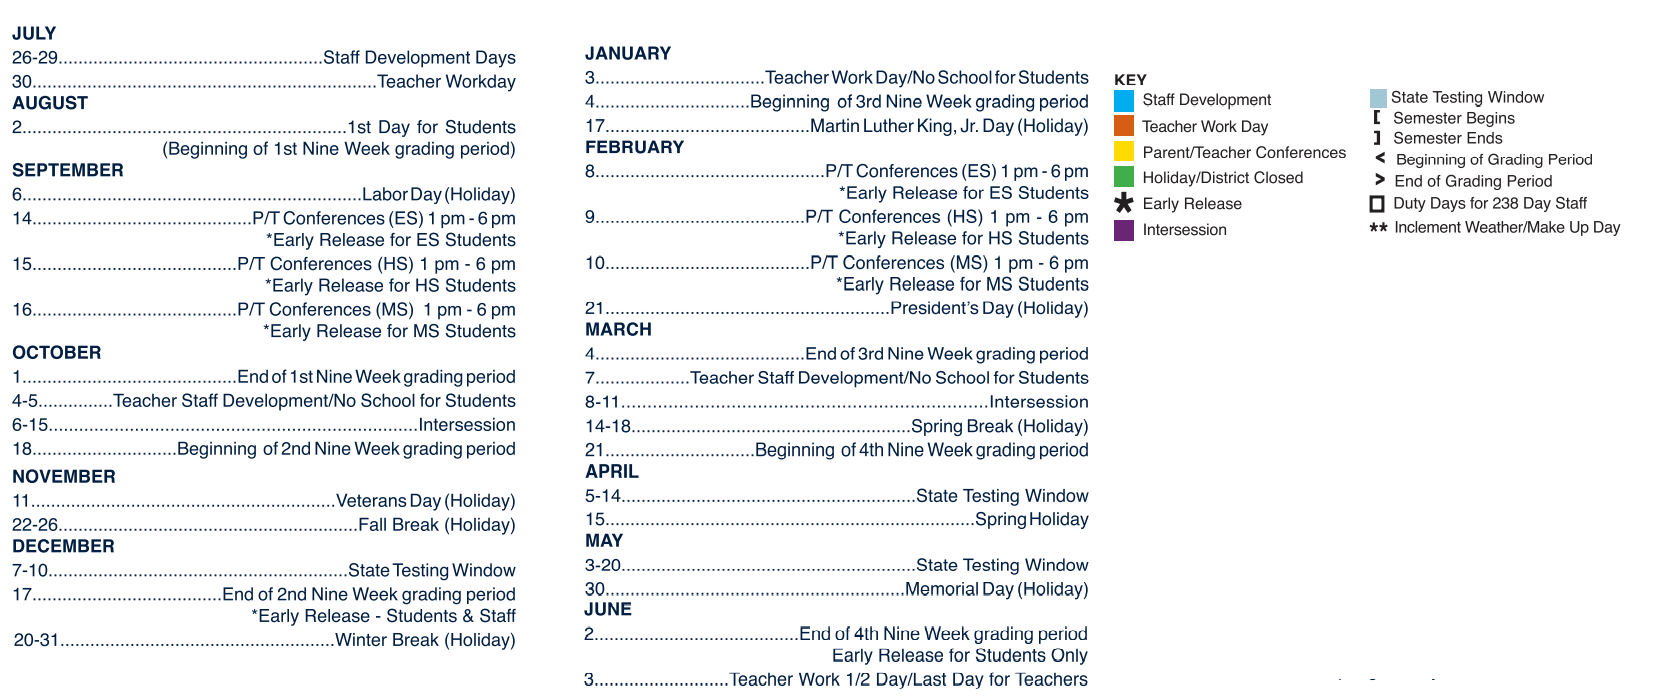 District School Academic Calendar Key for Cooley Elementary